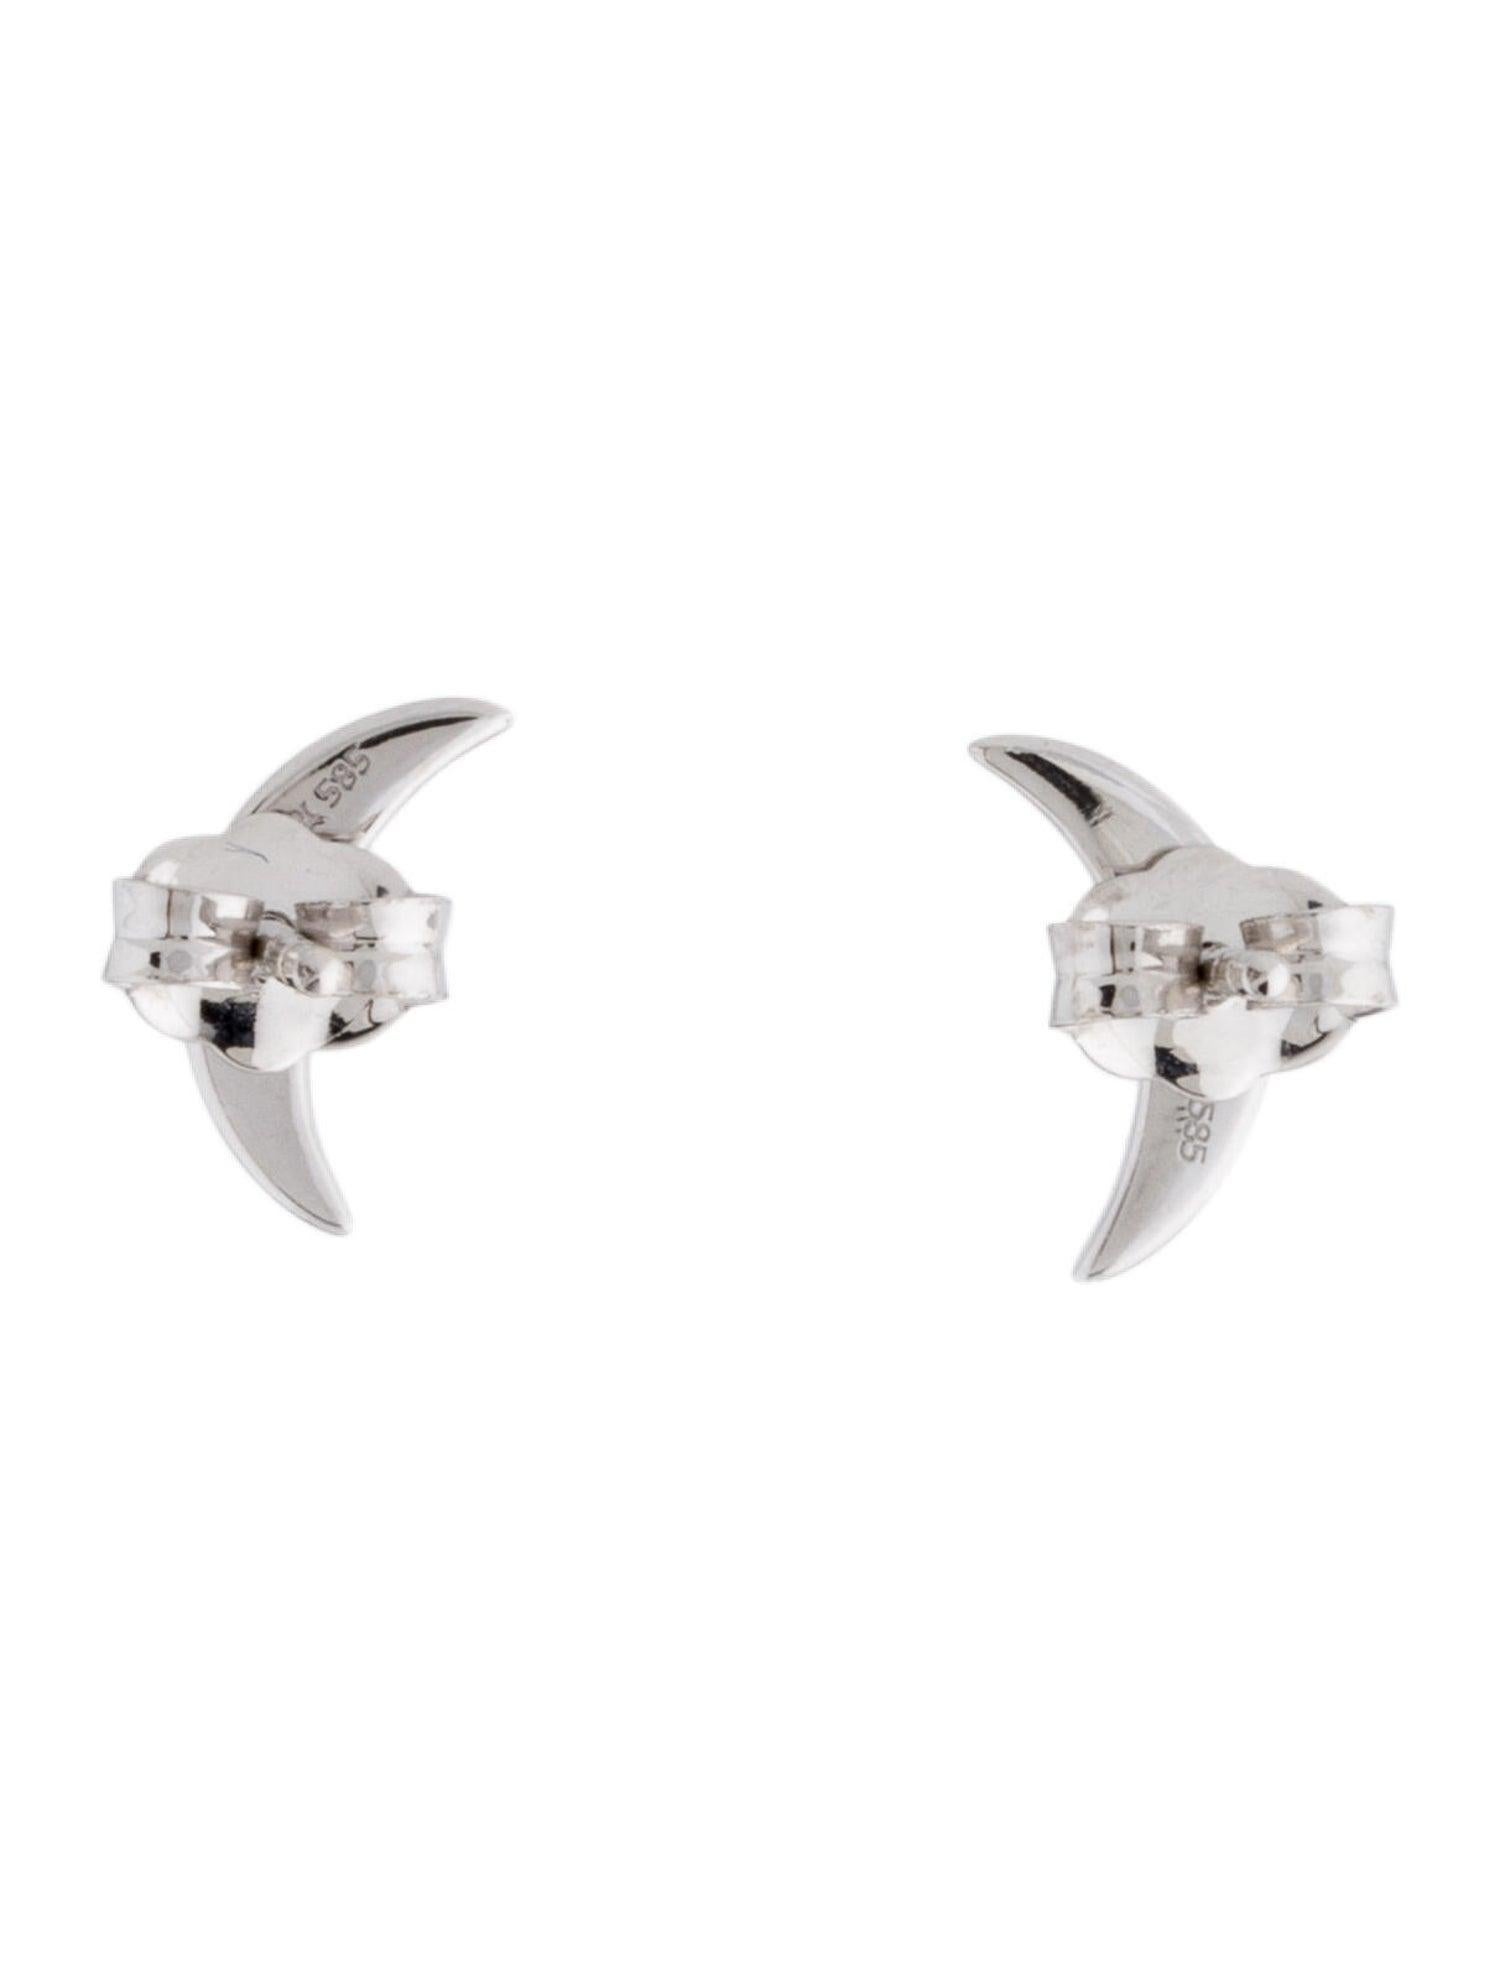 0.12 carat diamond earrings